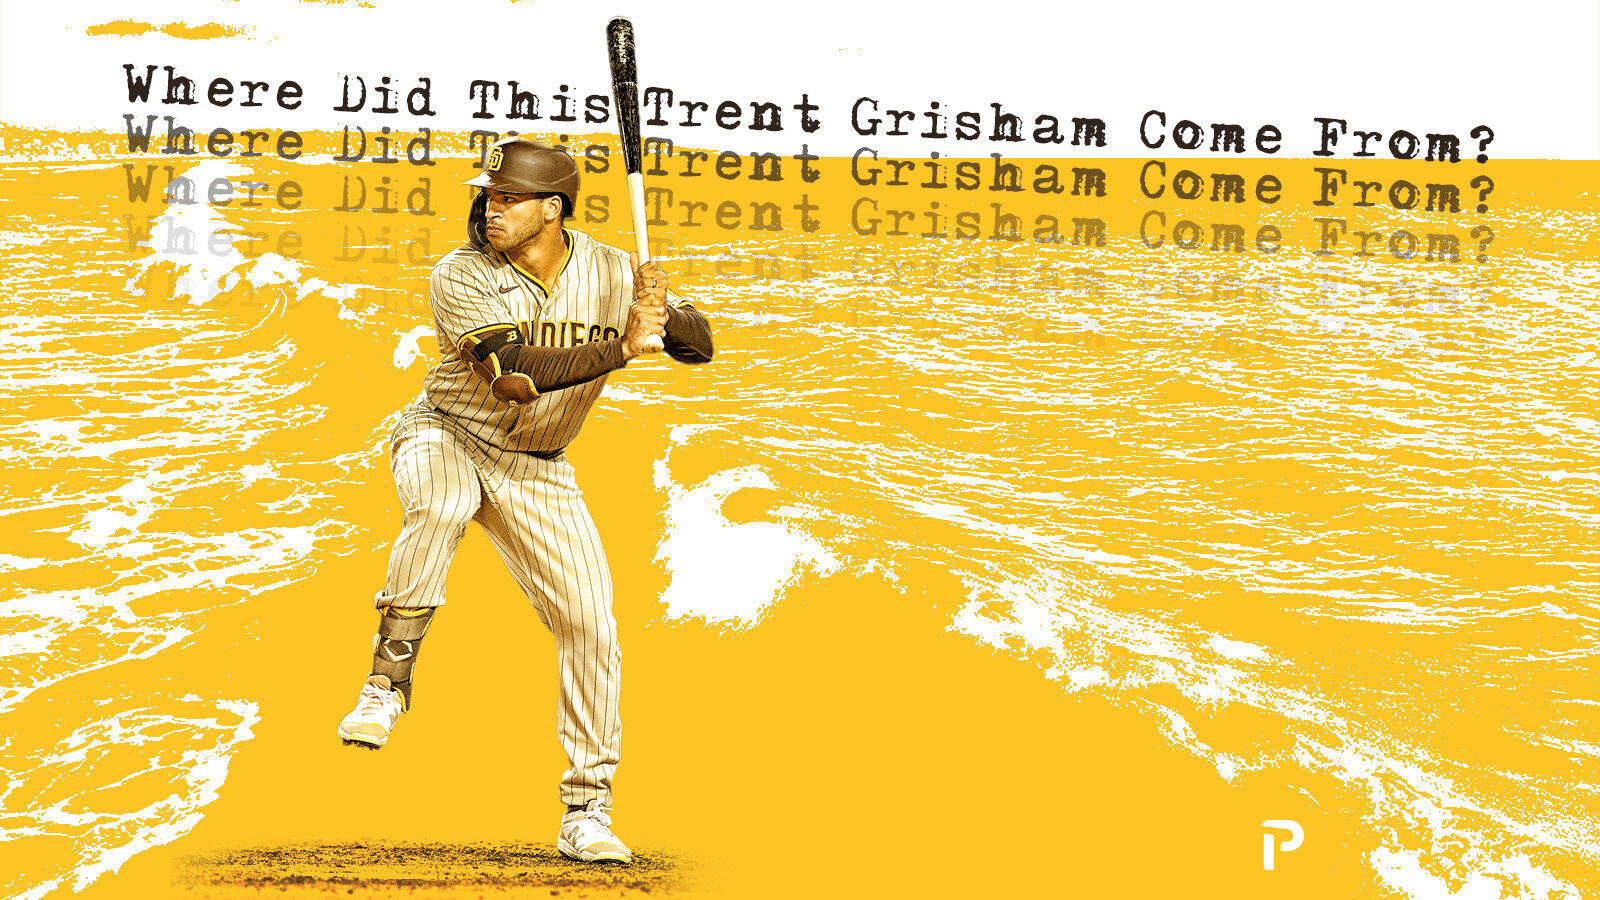 Trent Grisham - MLB Center field - News, Stats, Bio and more - The